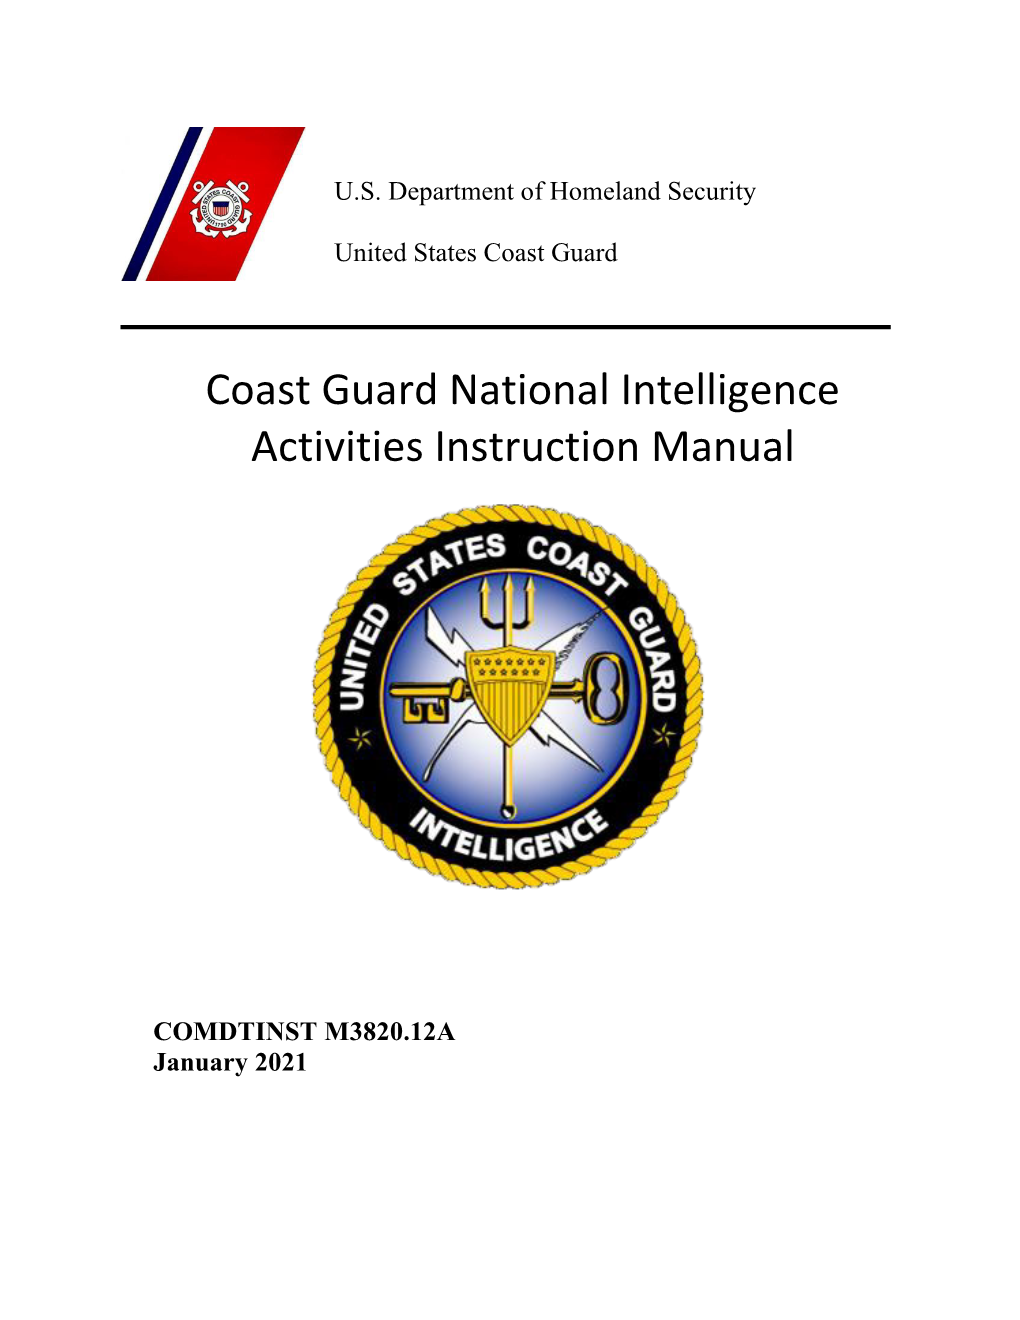 Coast Guard National Intelligence Activities Instruction Manual